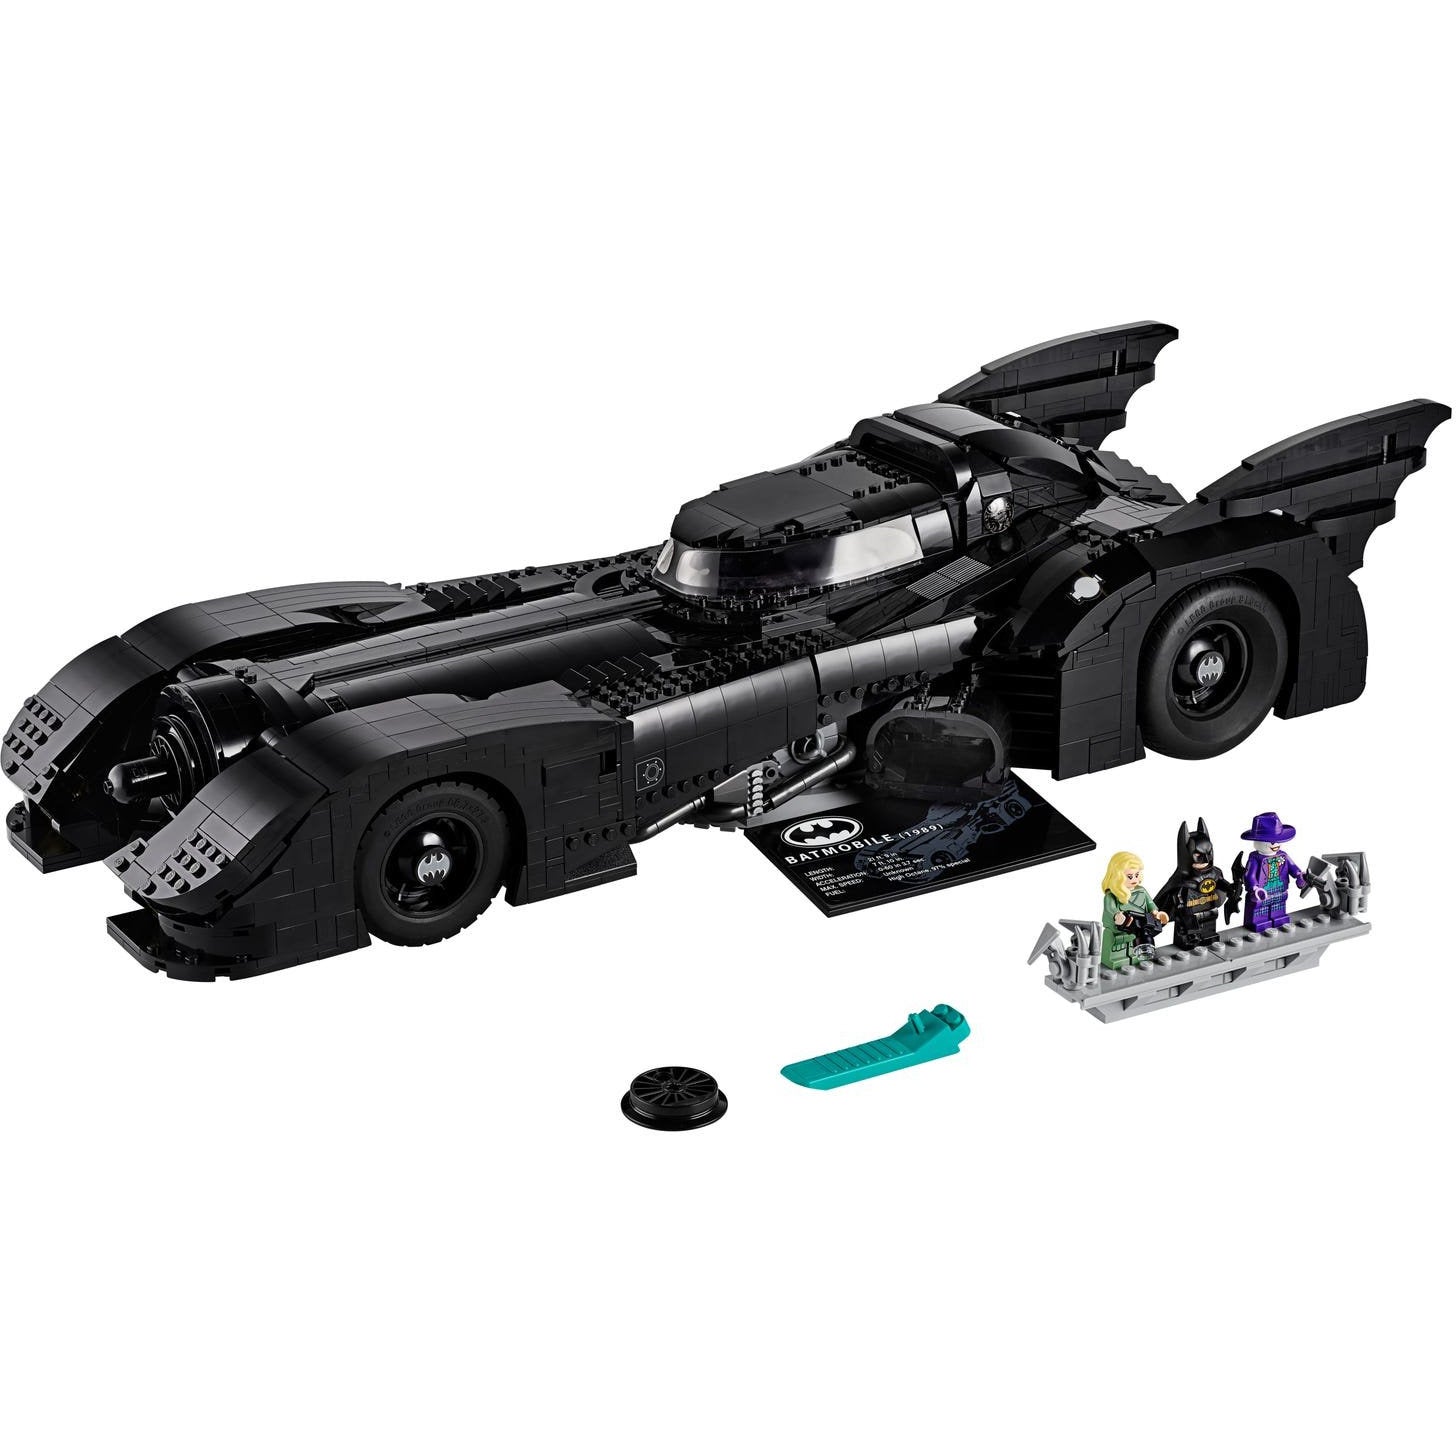 Lego Expert: UCS 1989 Batmobile 76139